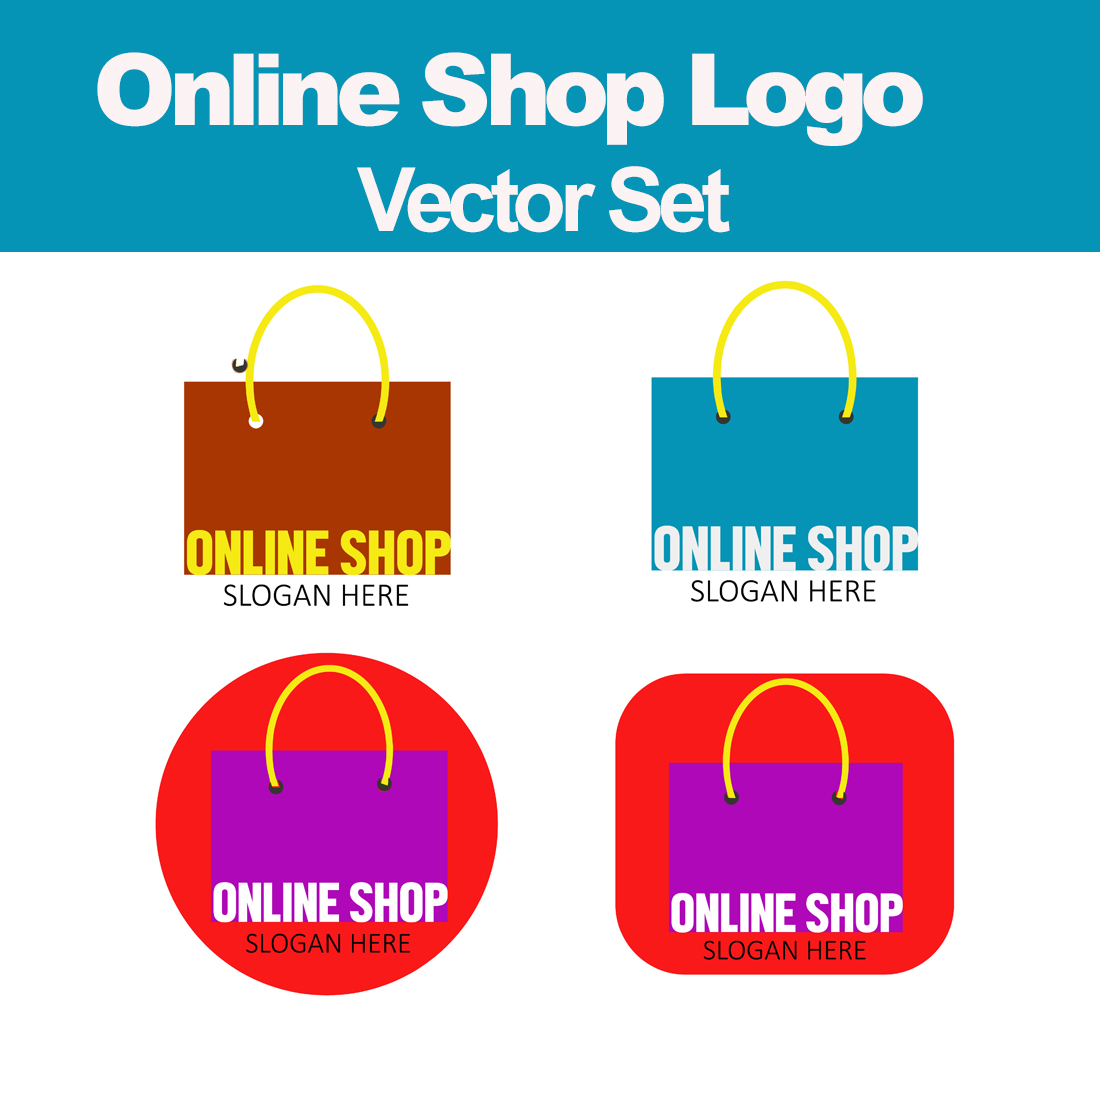 Online Shop Logo Vector Set! cover image.